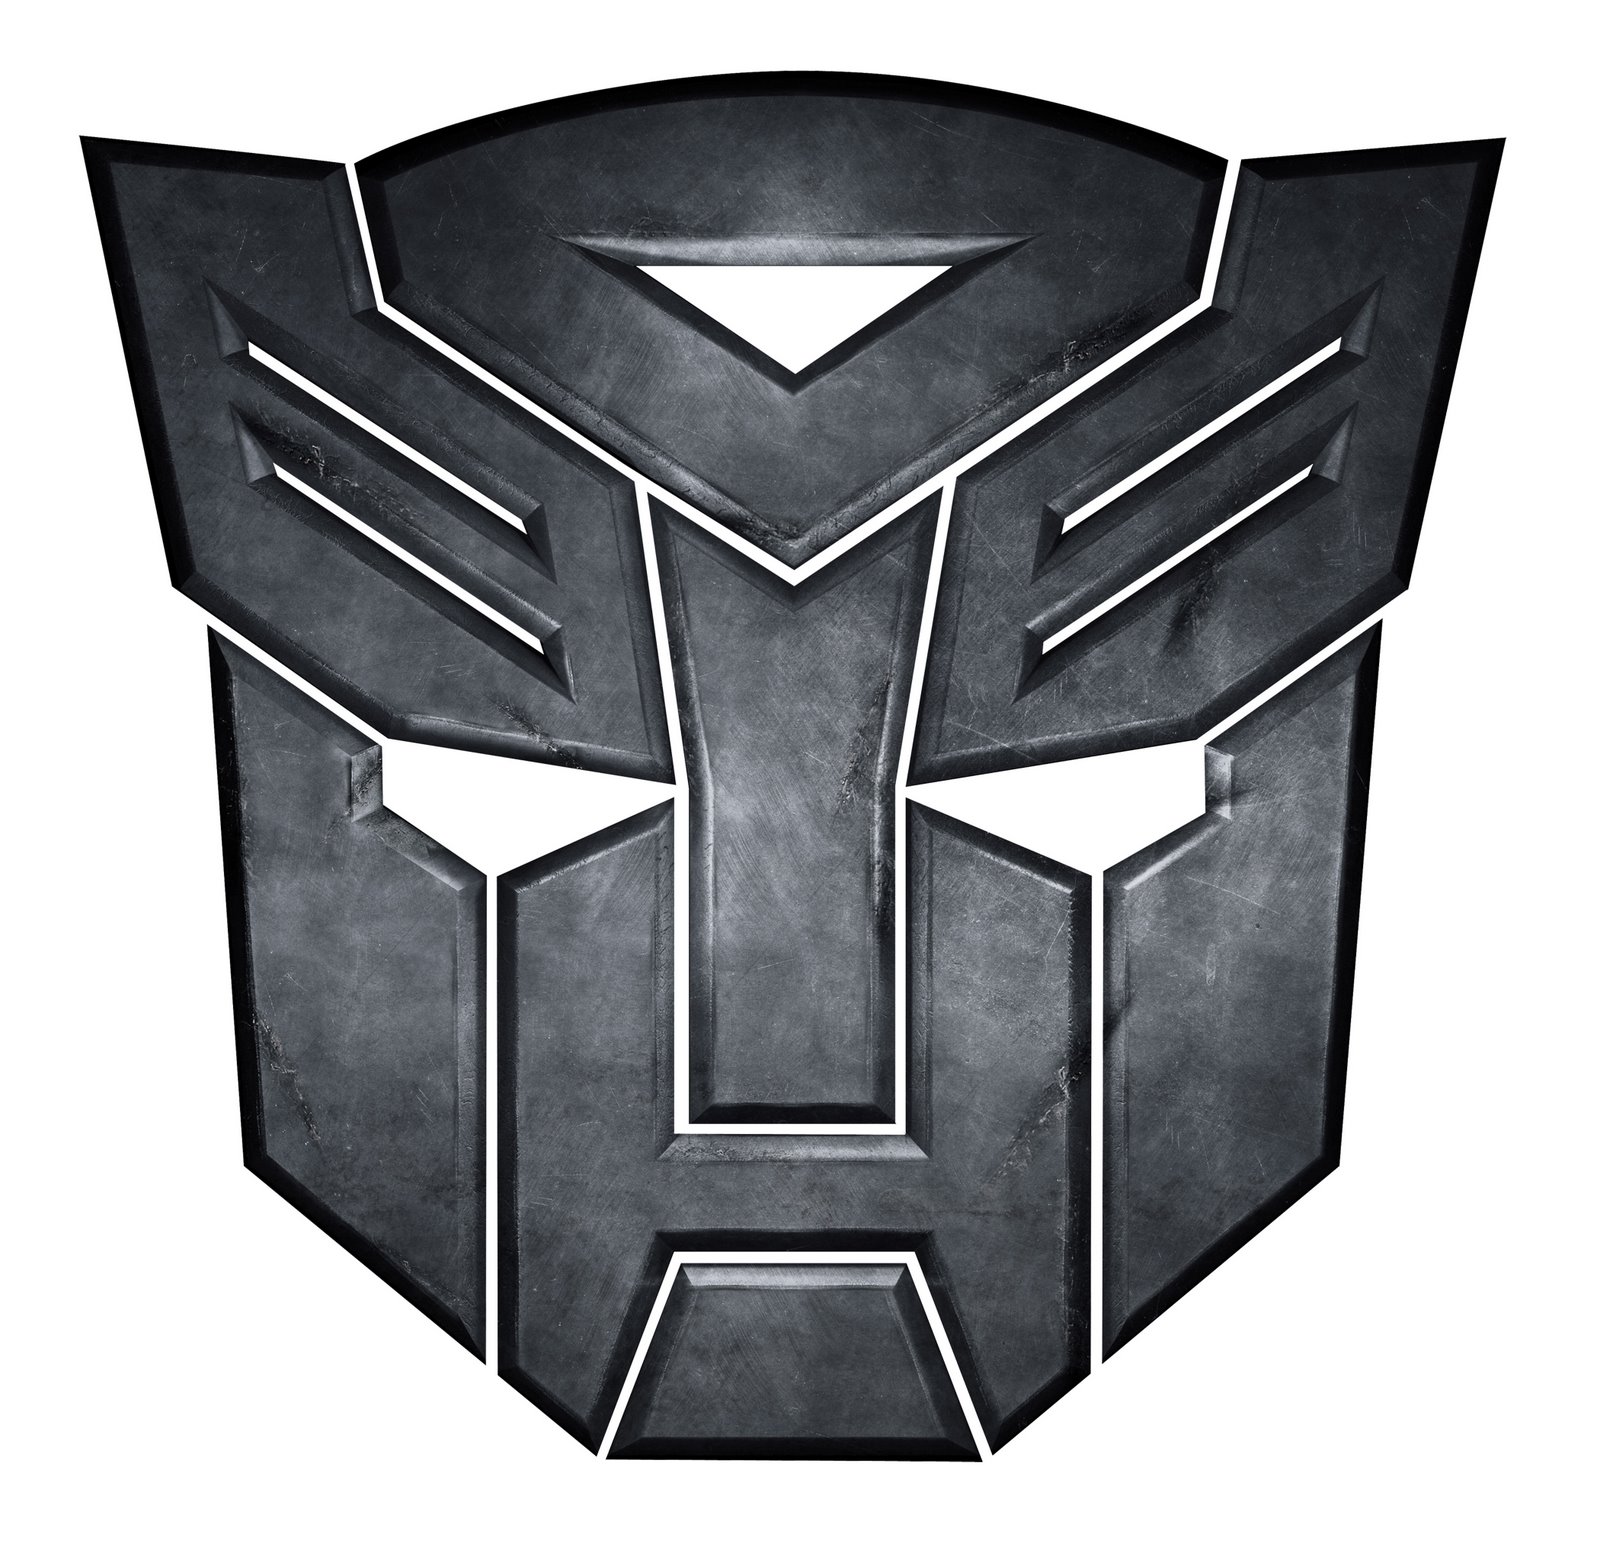 [Transformers+Autobot+Shield.jpg]